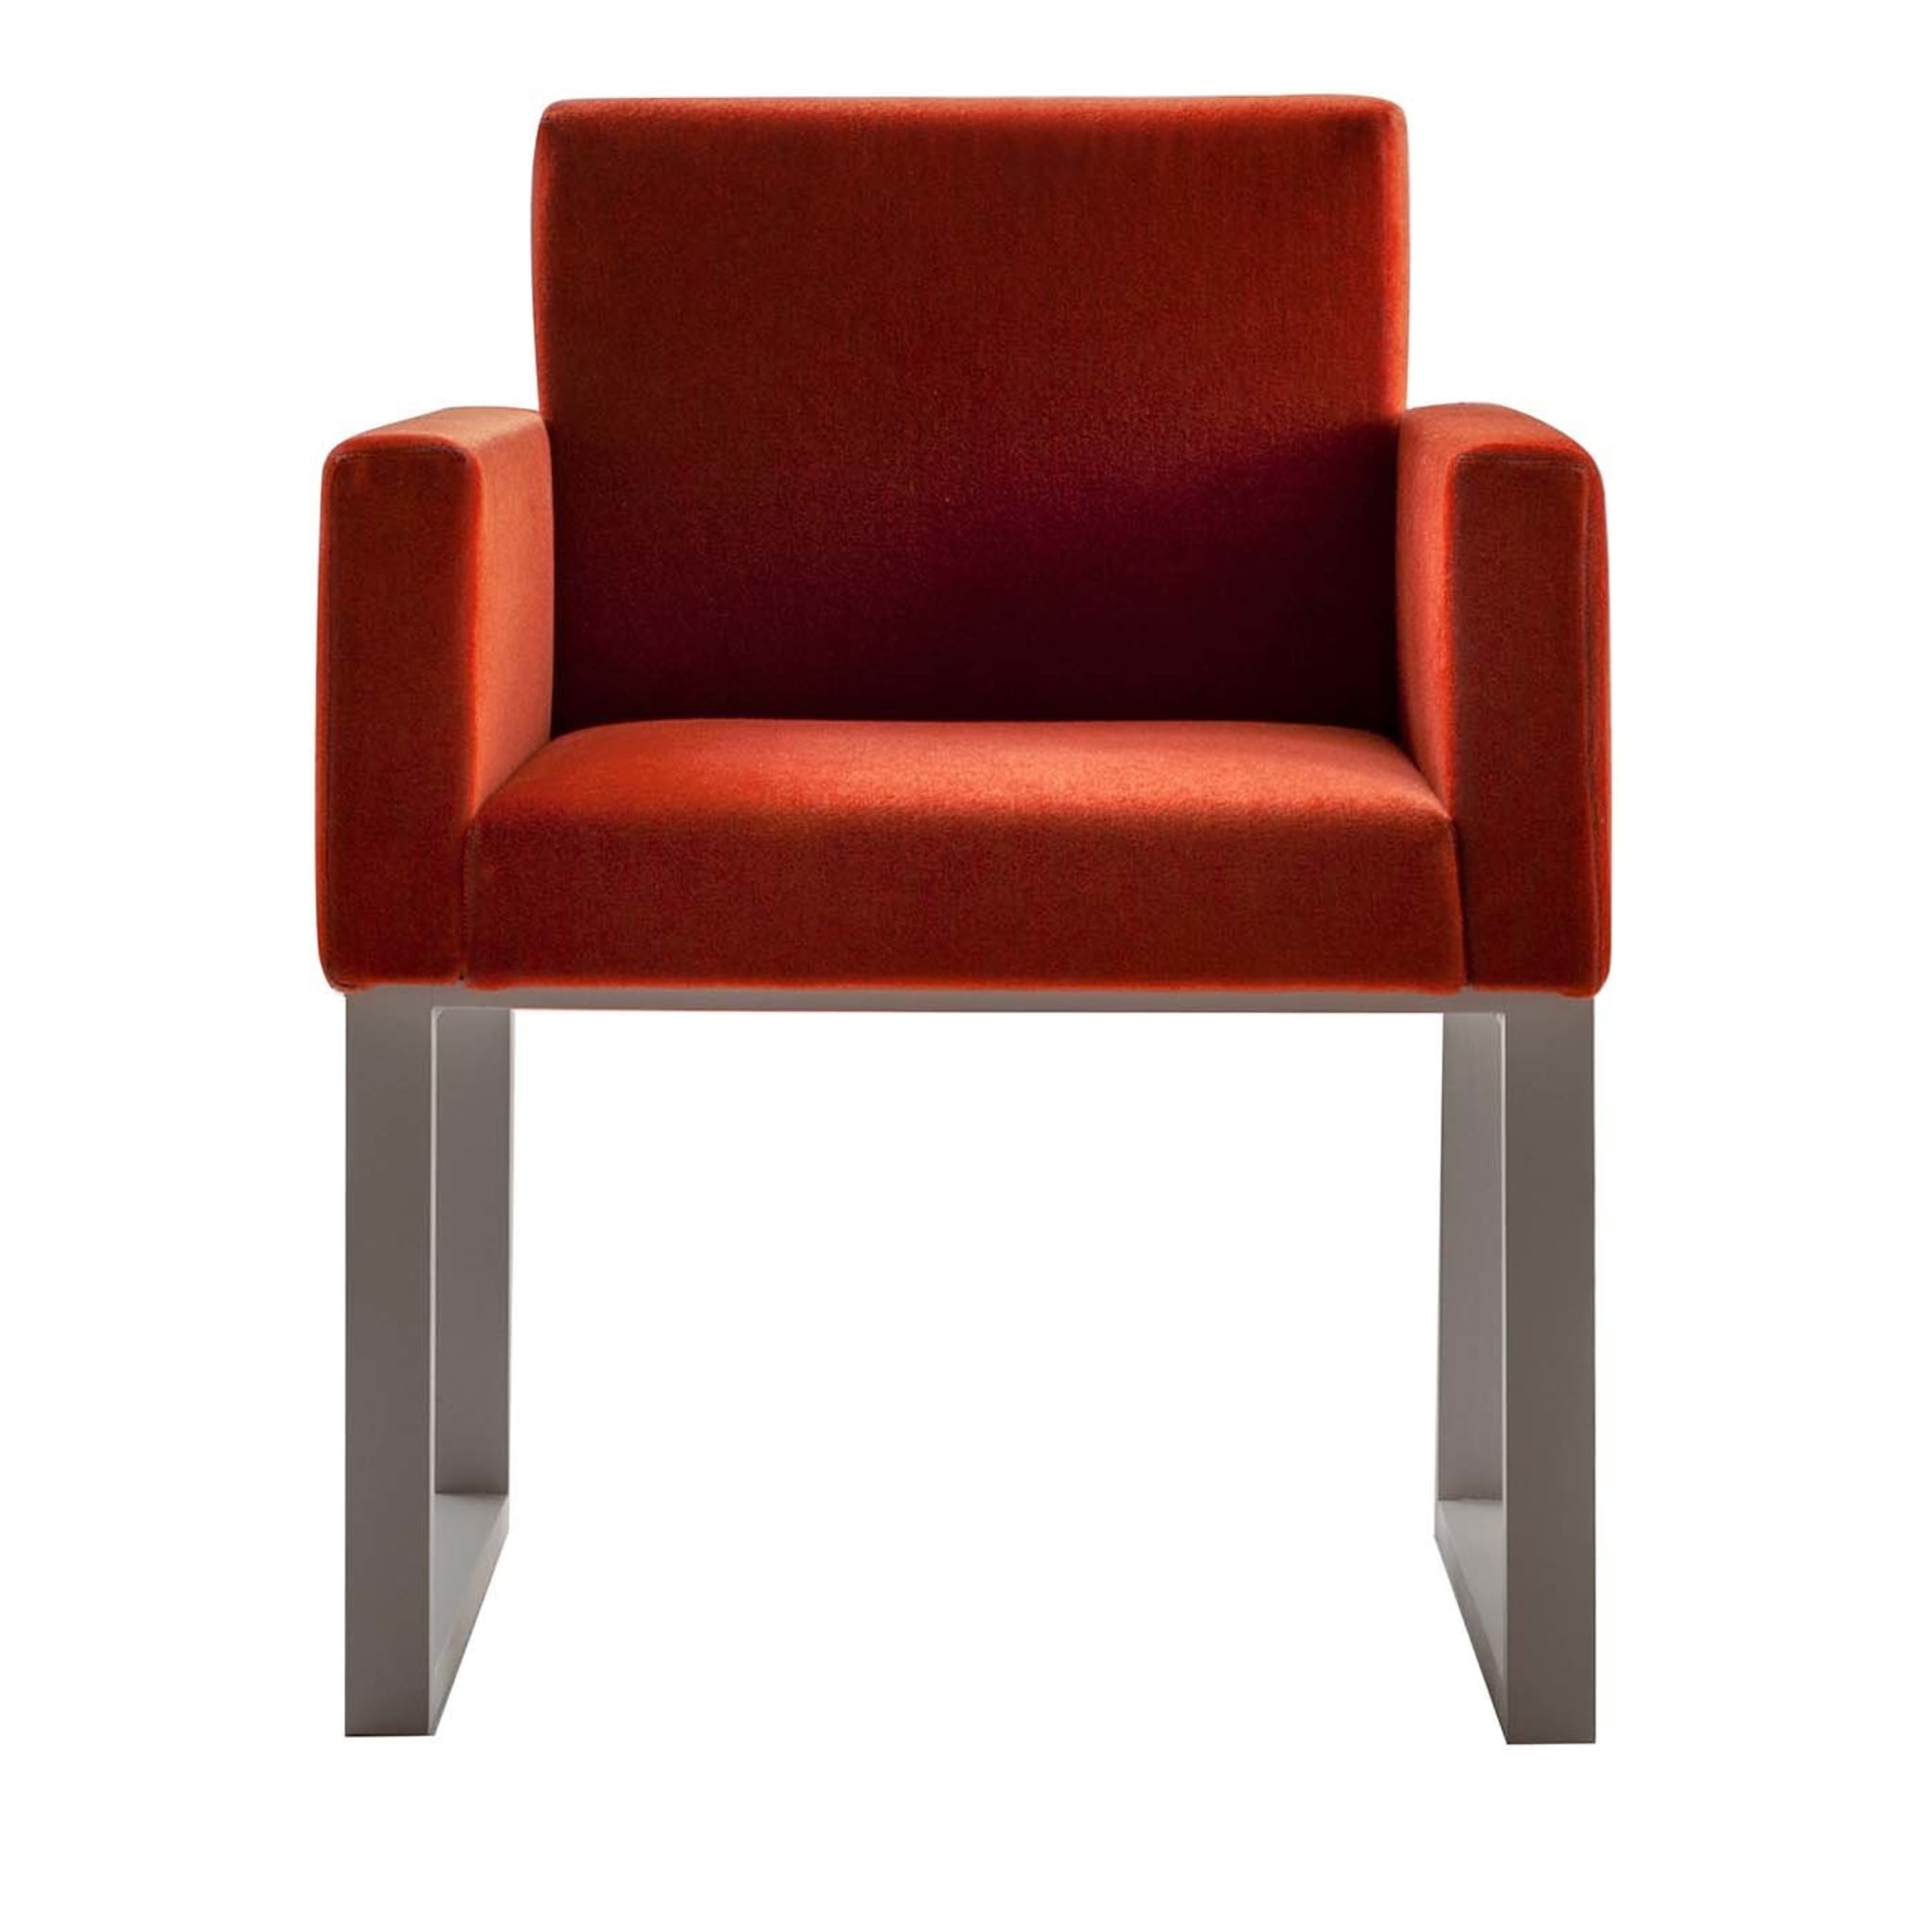 Maxima Chair by Bartoli Design - Main view